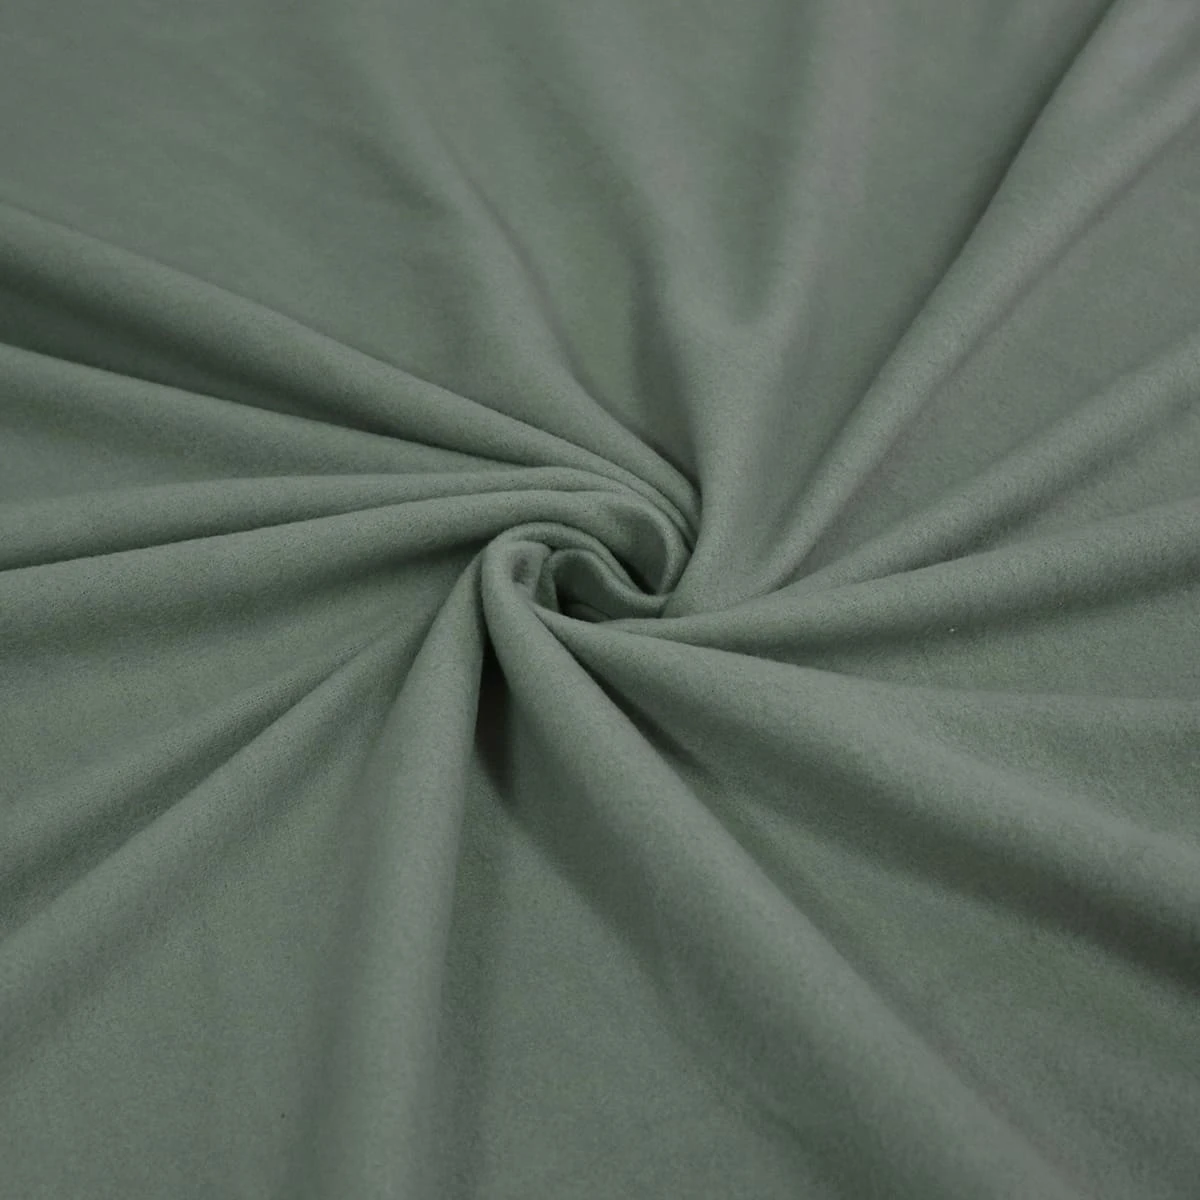 Solid Color Fleece Blanket (Green) - Foldover Edging